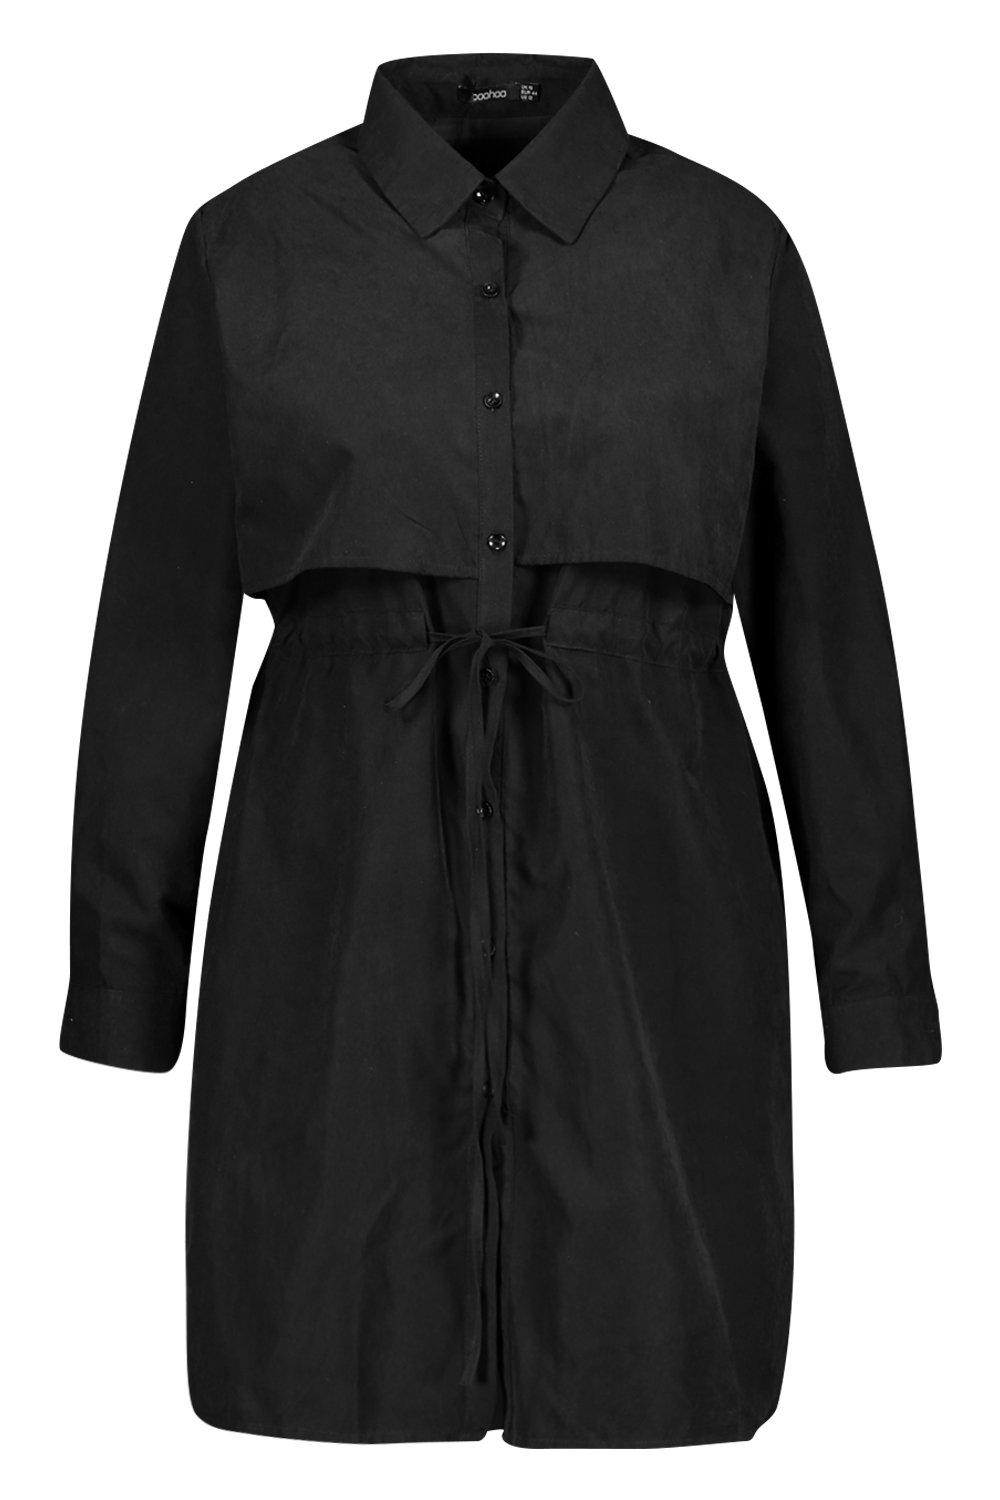 Boohoo Shirt Dress Utility Pocket Reverse Collar Size 10 Black Long Sleeve EW25 